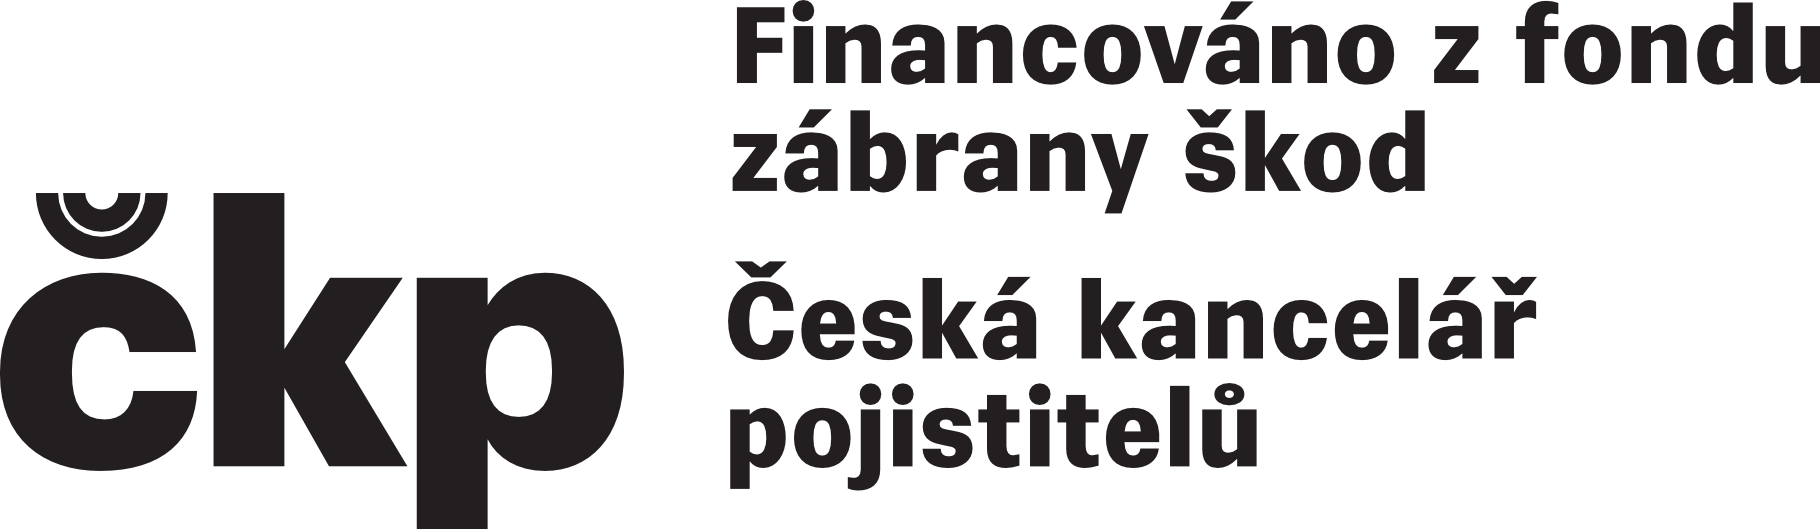 CKP_Financovani_Z_Fondu_Zabrany_Skod_cernobile_4_radky.png